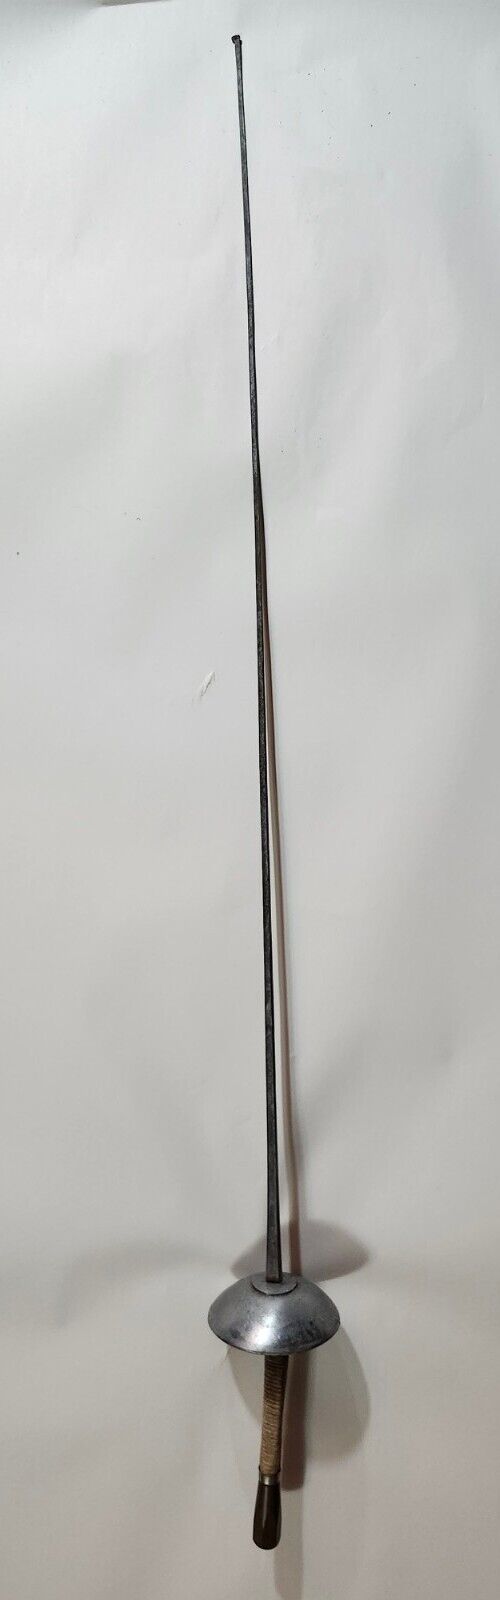 Vintage Fencing Sword metal Handle Castello 111 Dull Blade Fencing France 43\